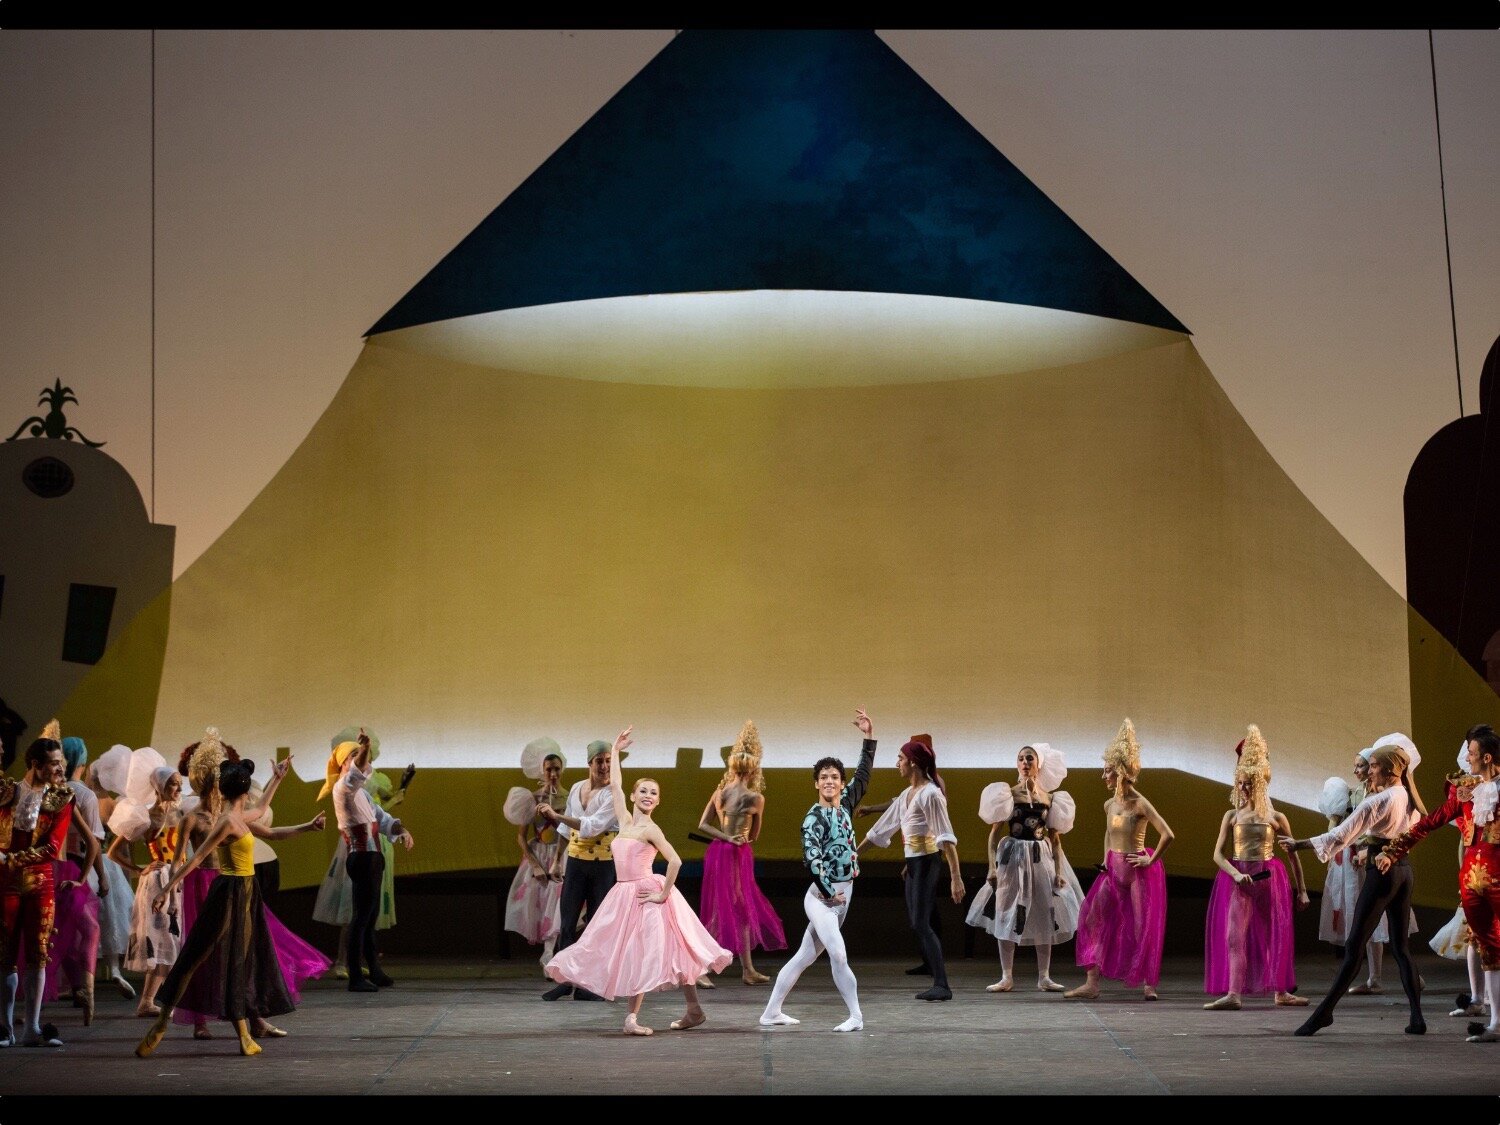  Don Quixotea ballet choreographed by Mikhail BaryshnikovTeatro dell'Opera, Rome, 2017
© photo by Yasuko Kageyama 